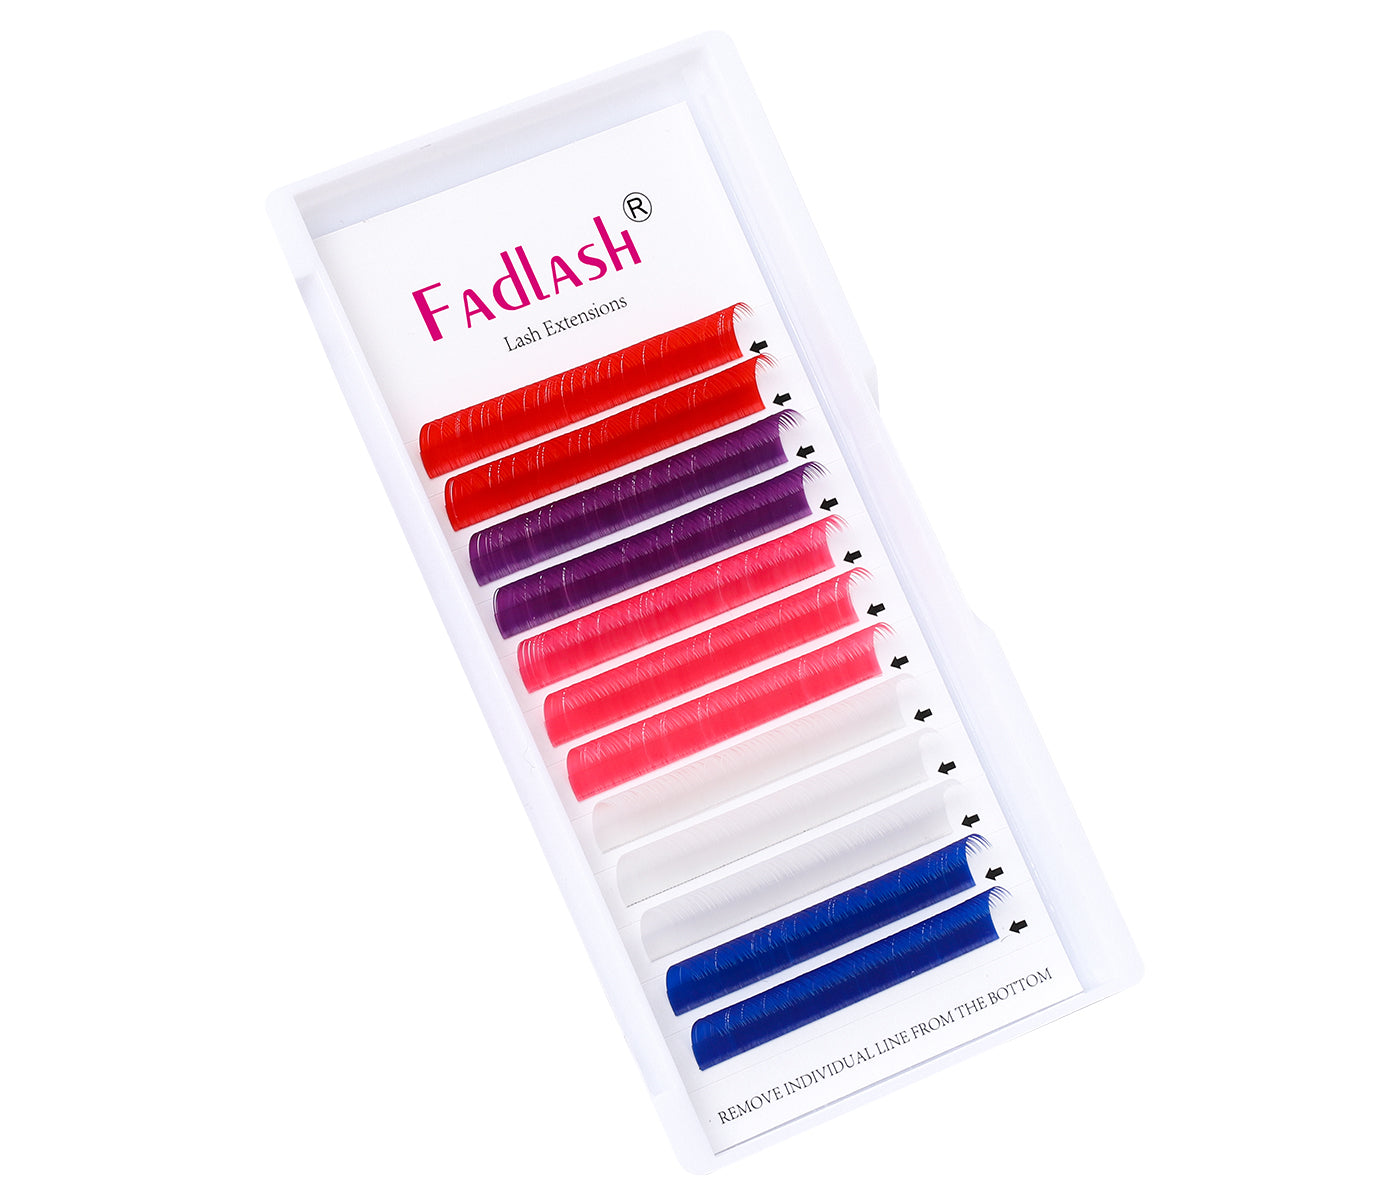 Colored Individual Lash Extensions - Fadlash